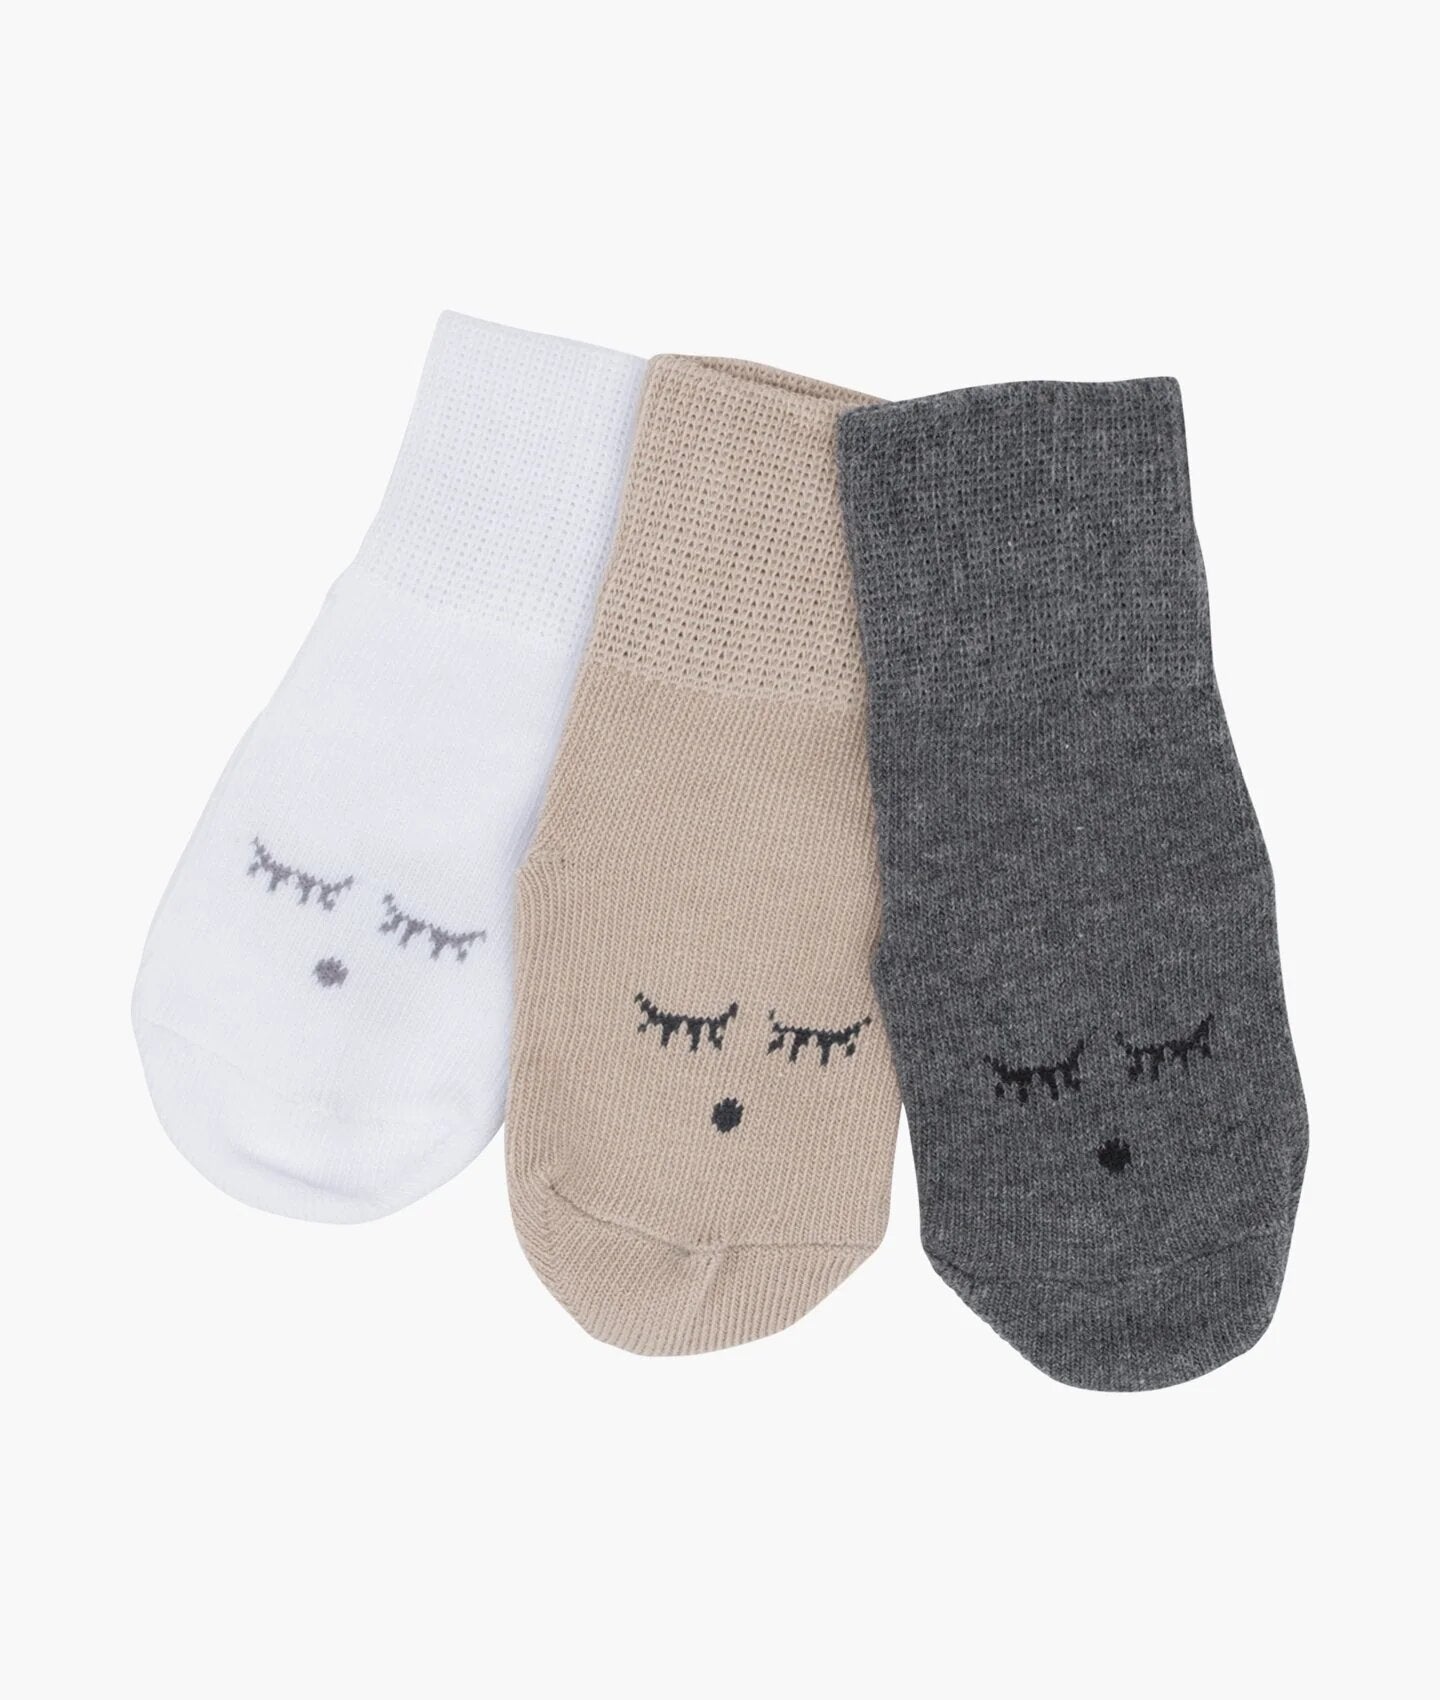 SC Socks White/Khaki/Dark Grey